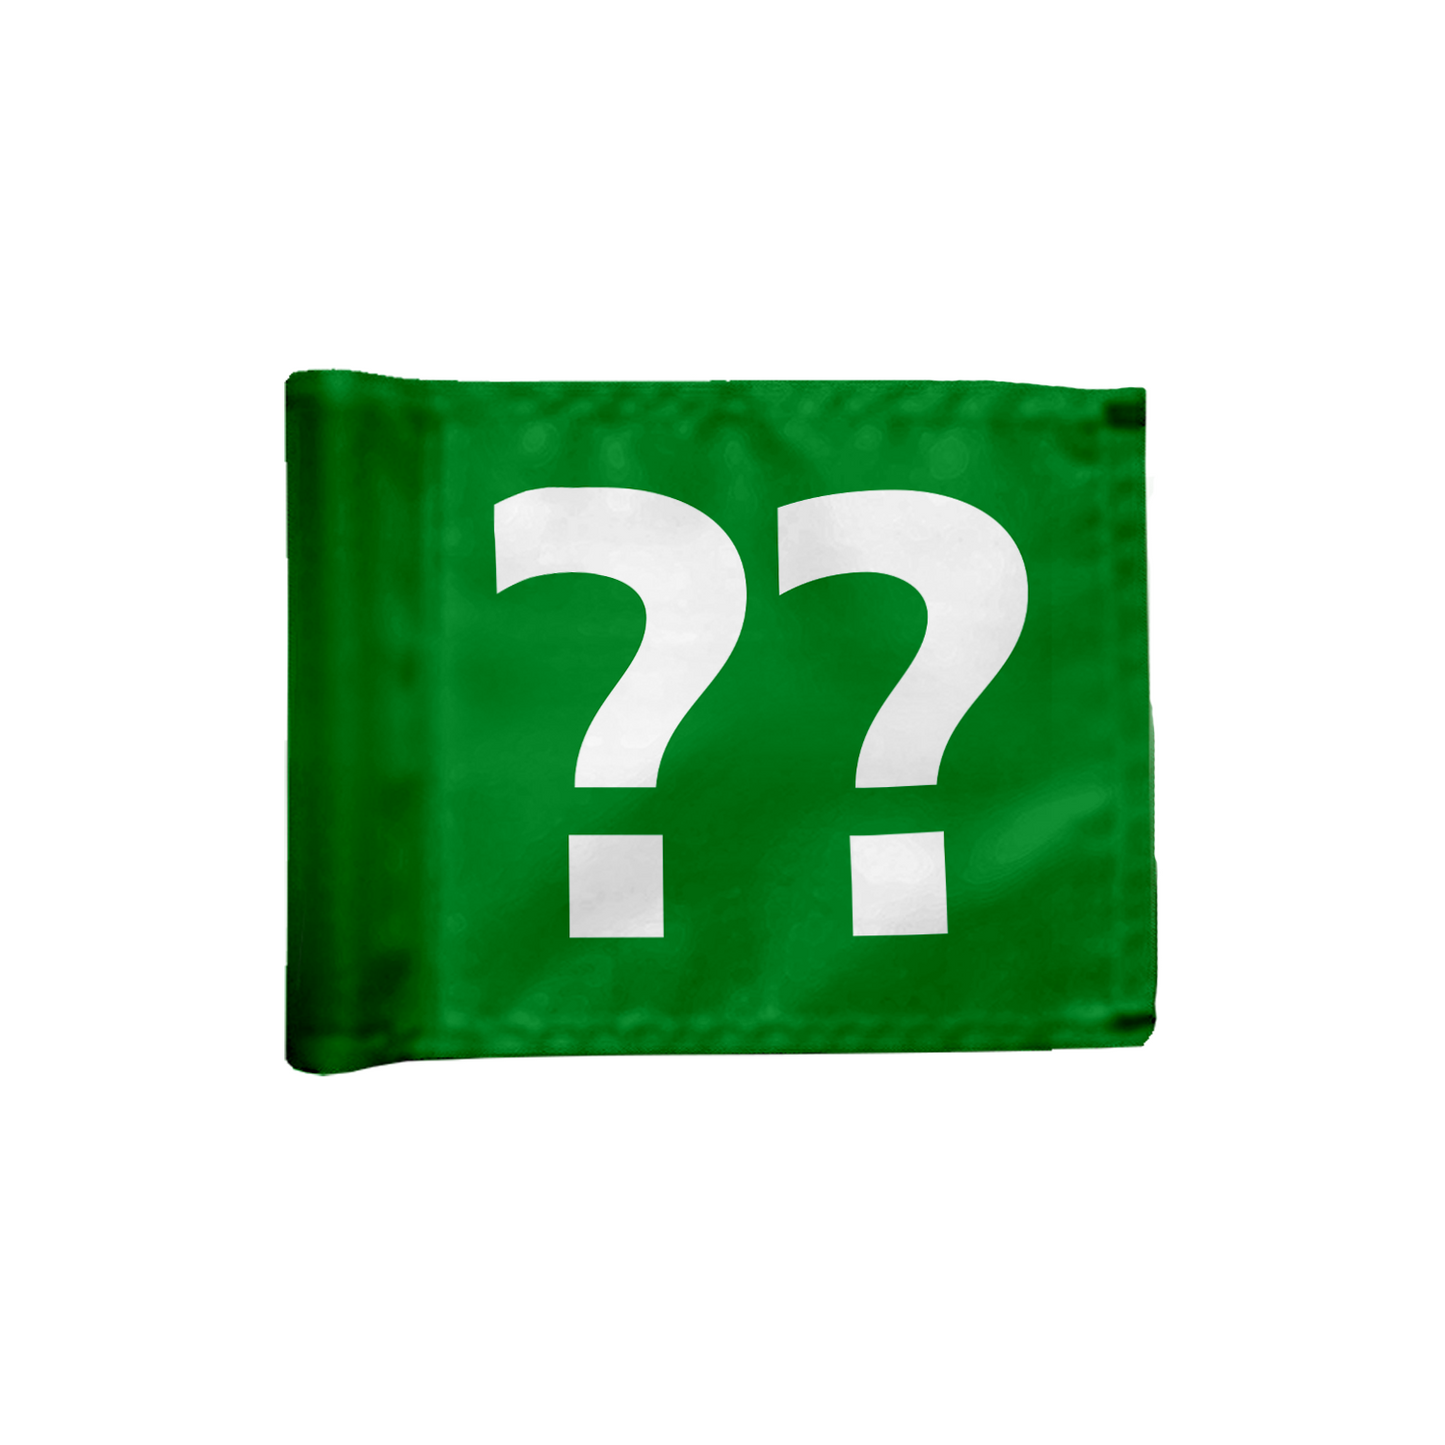 Stykvis puttinggreenflag, afstivetr, i grøn med valgfrit hulnummerl, 200 gram flagdug